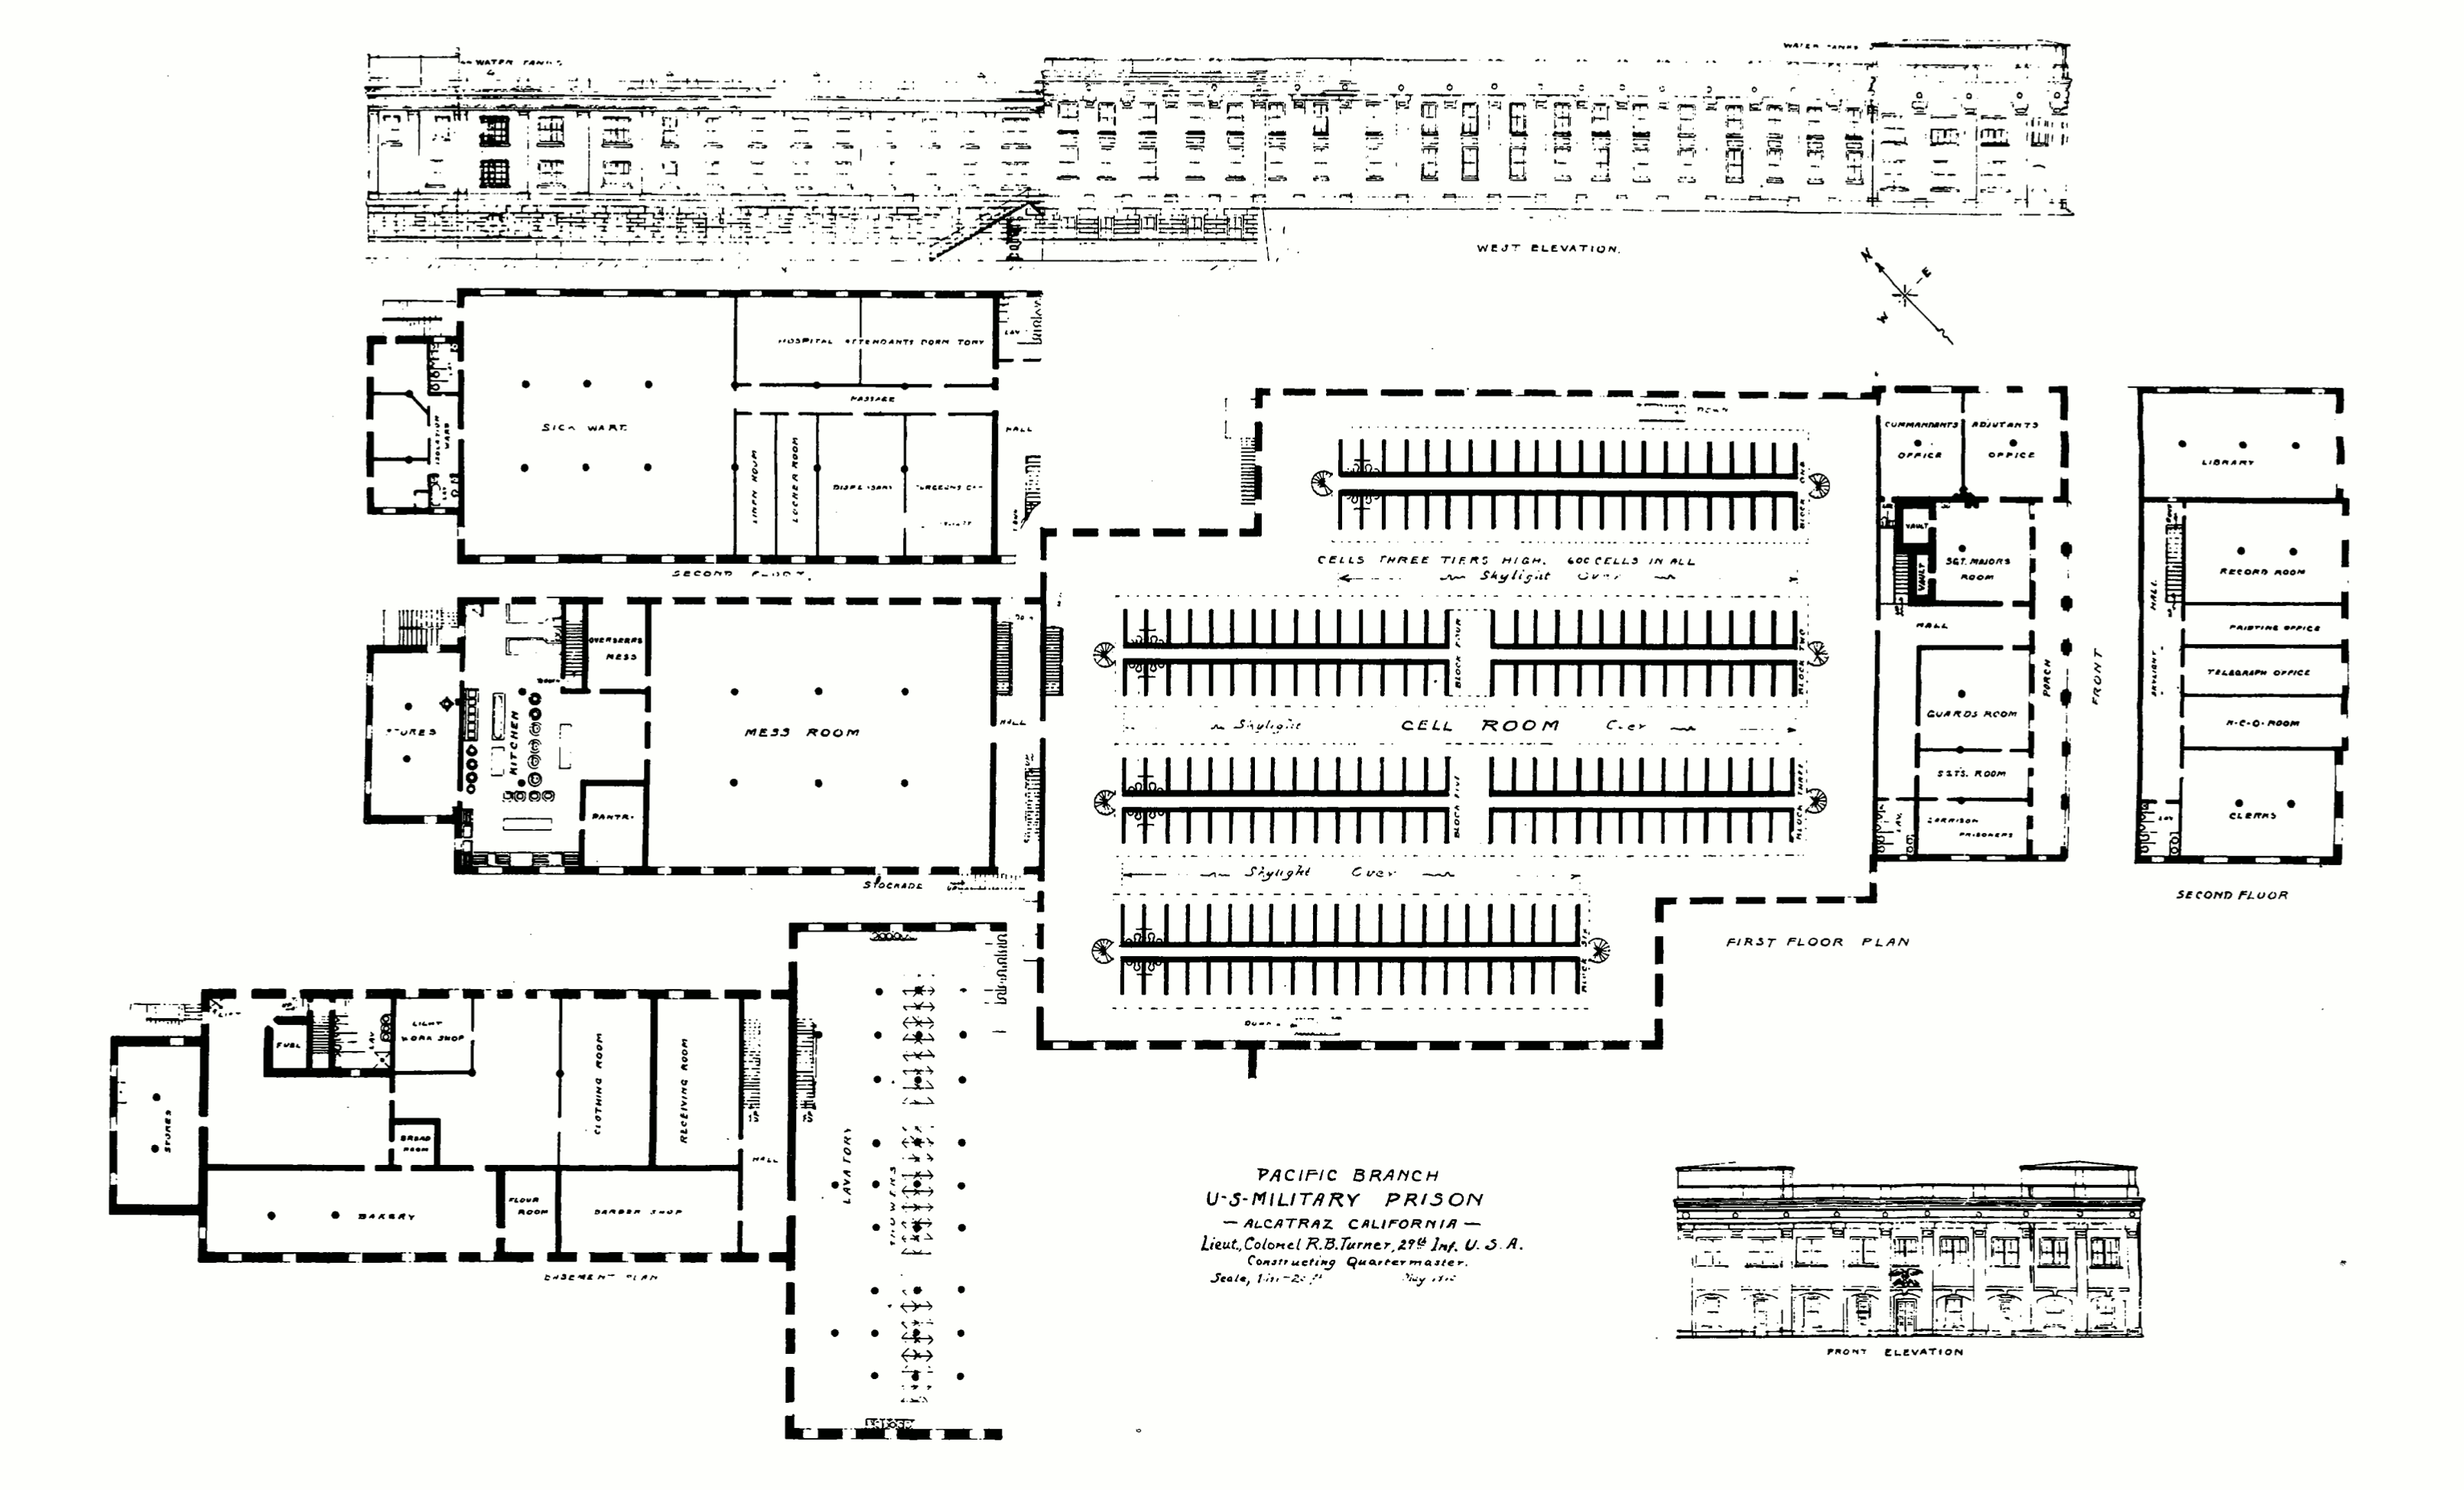 NPS_alcatraz-1910-military-prison-map